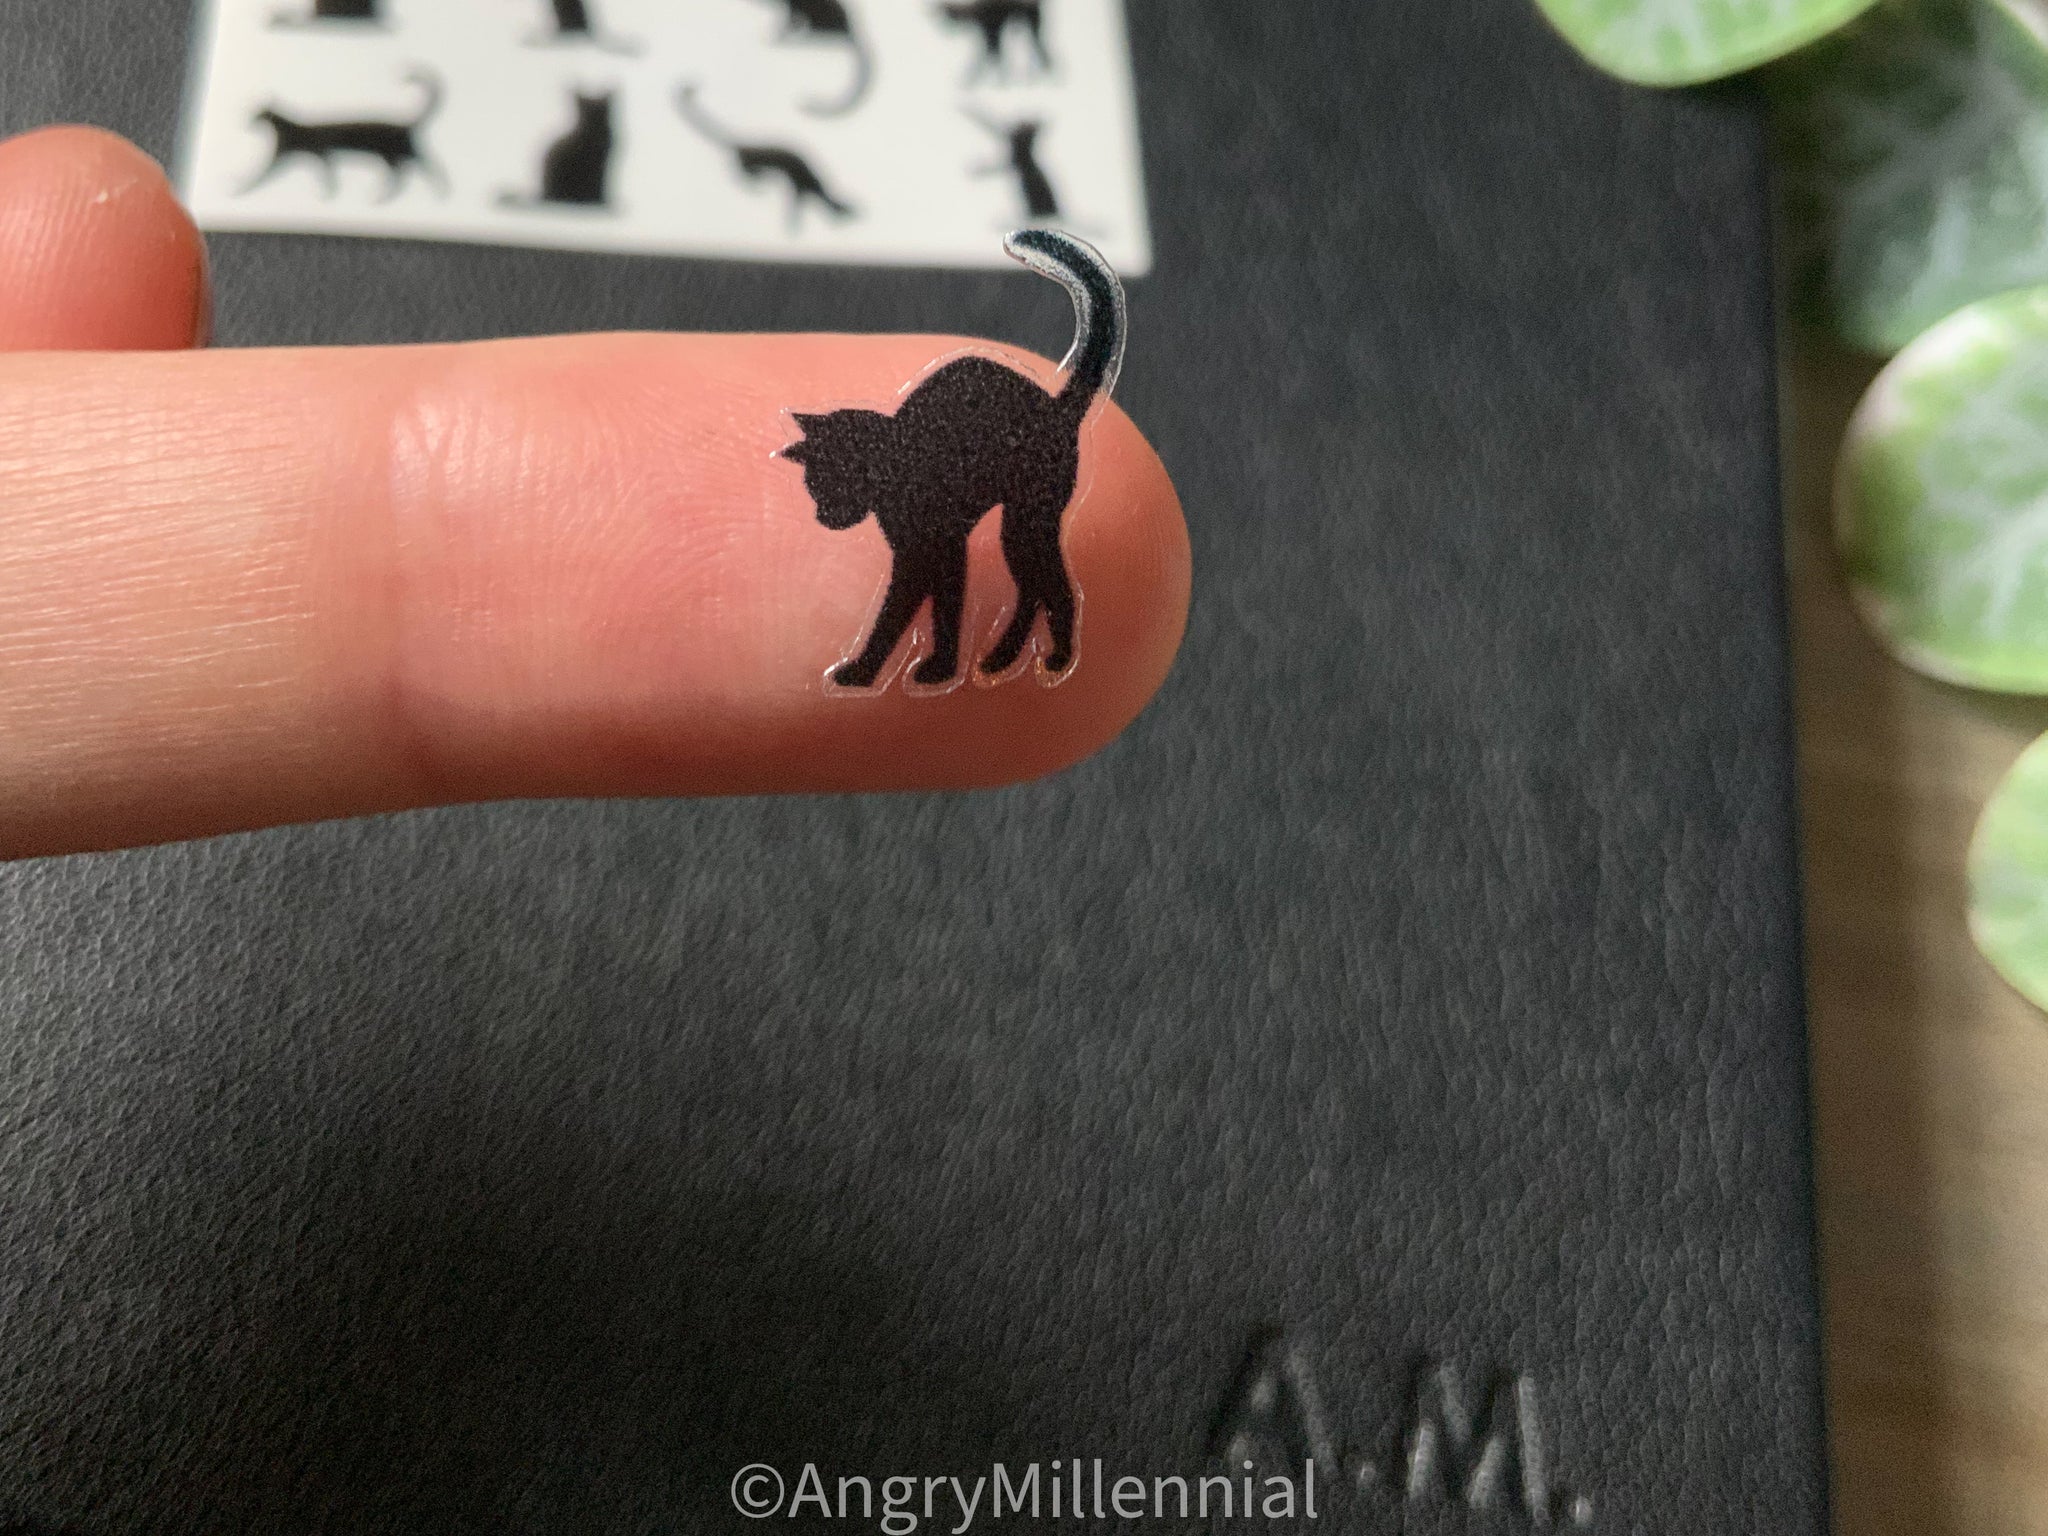 A6 Cat in a Garden Stickers - Planner stickers - Bullet Journal